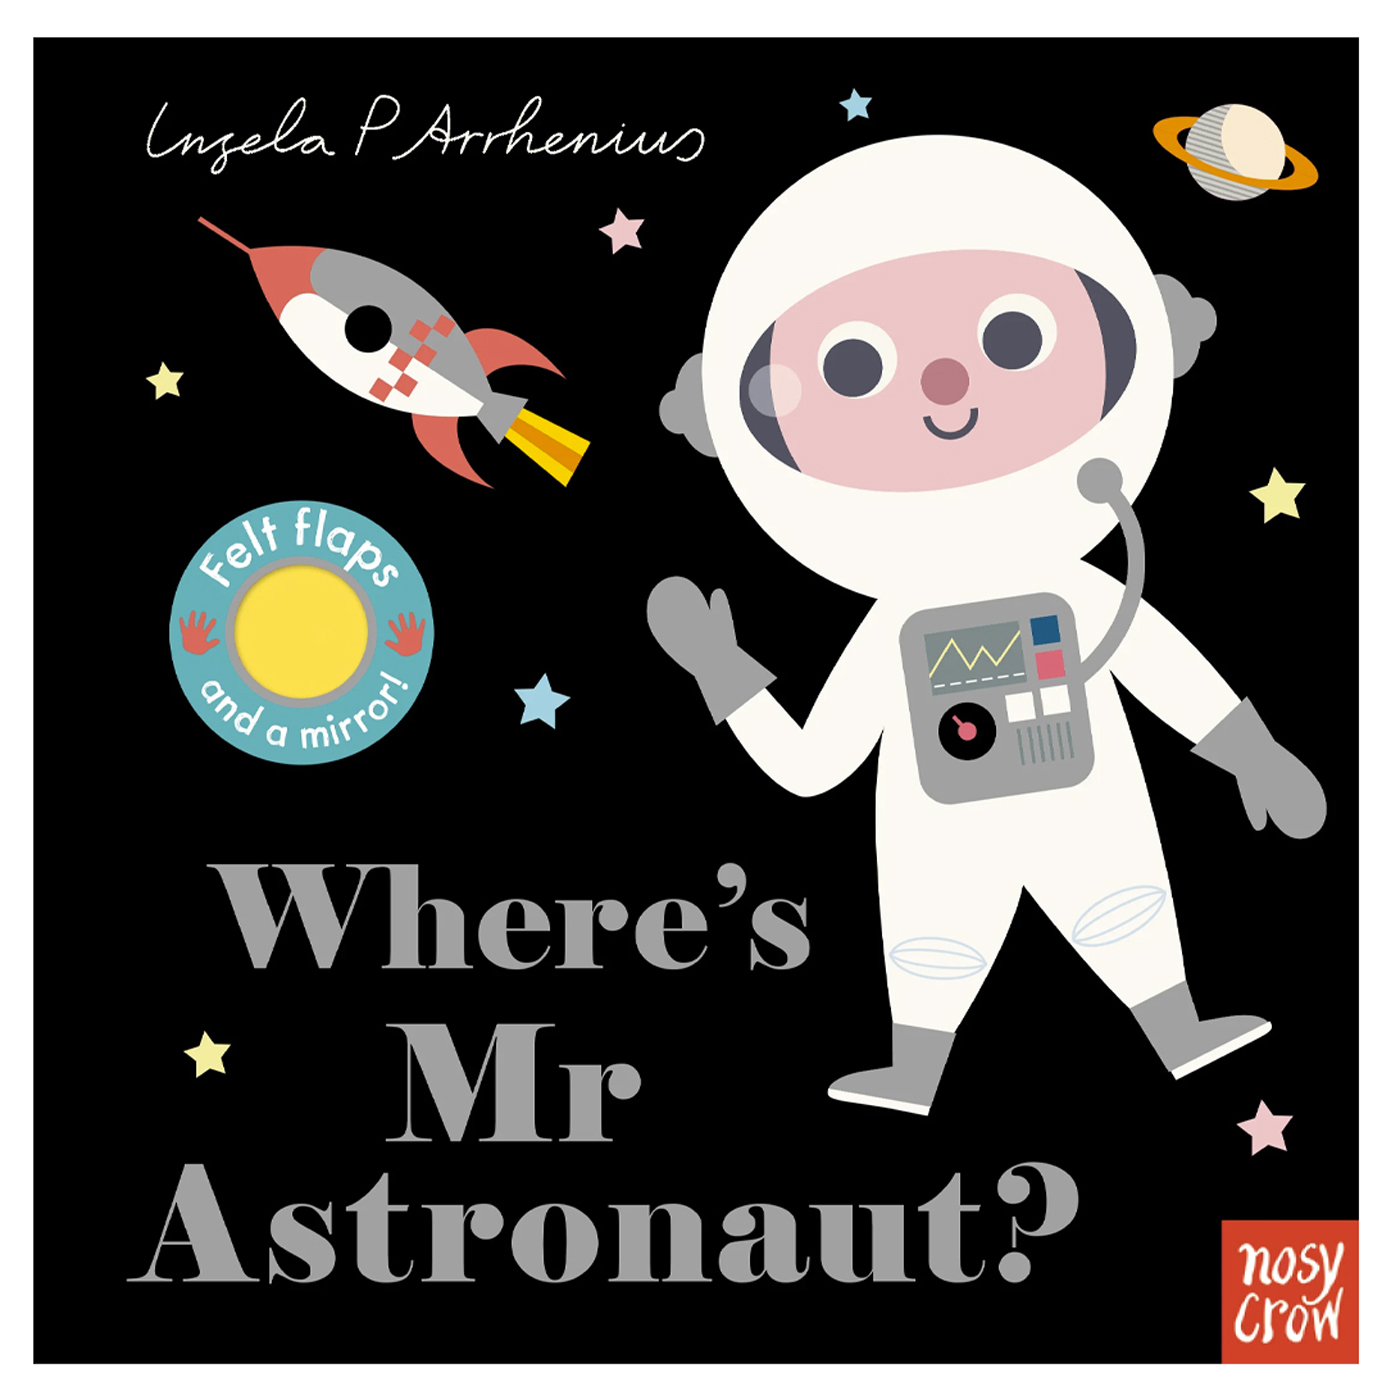  Where’s Mr Astronaut?